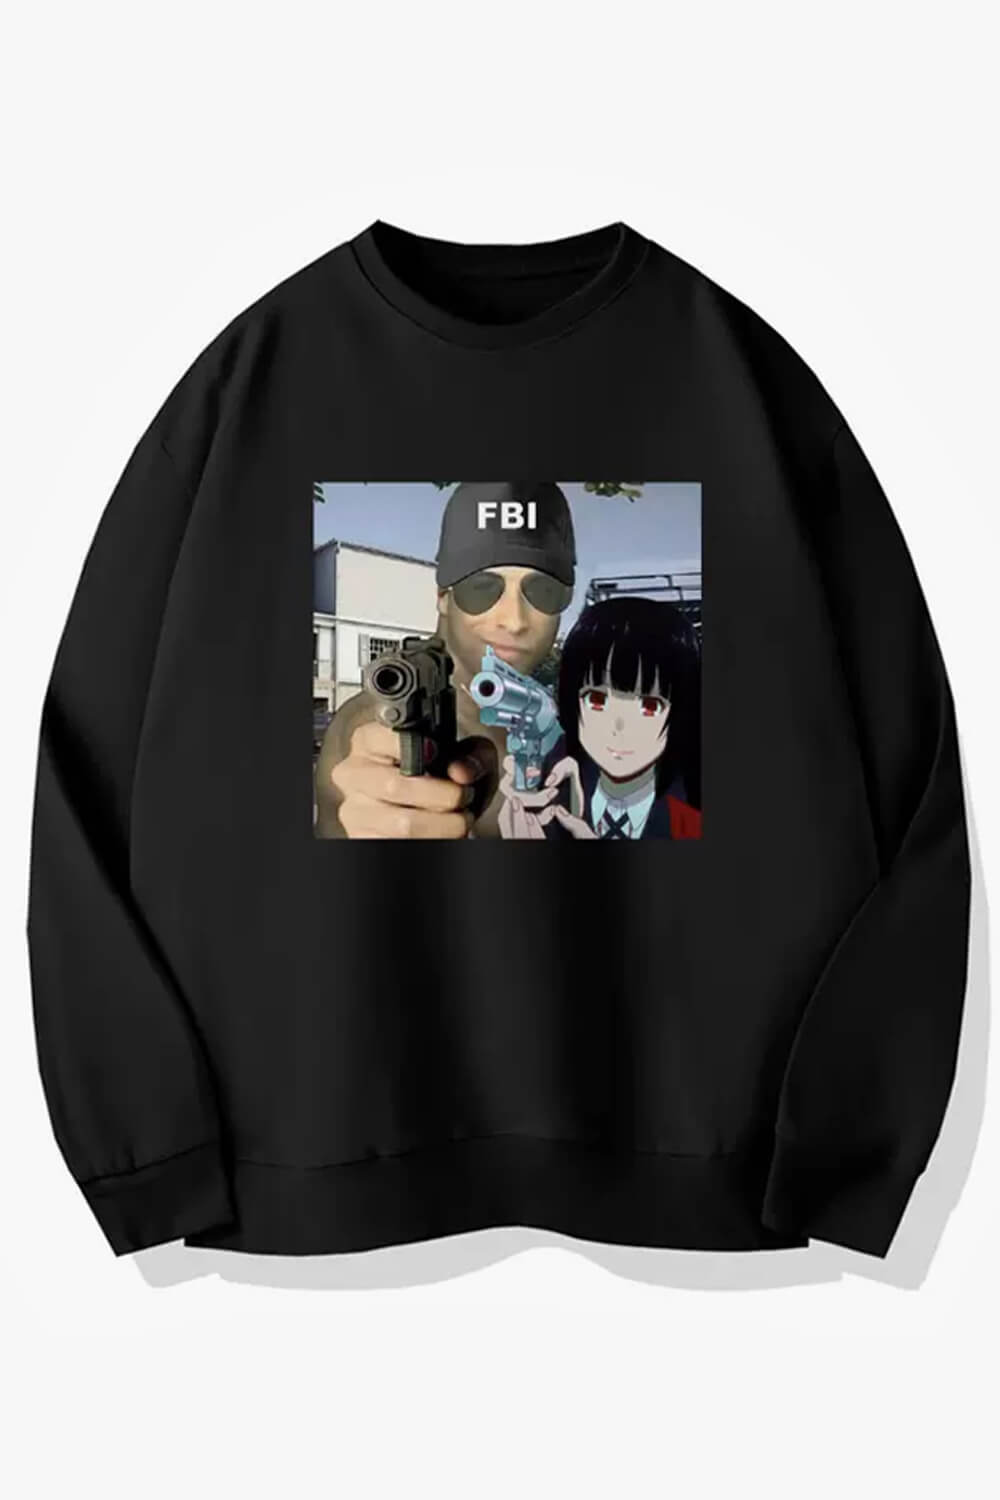 Anime FBI - Coub - The Biggest Video Meme Platform